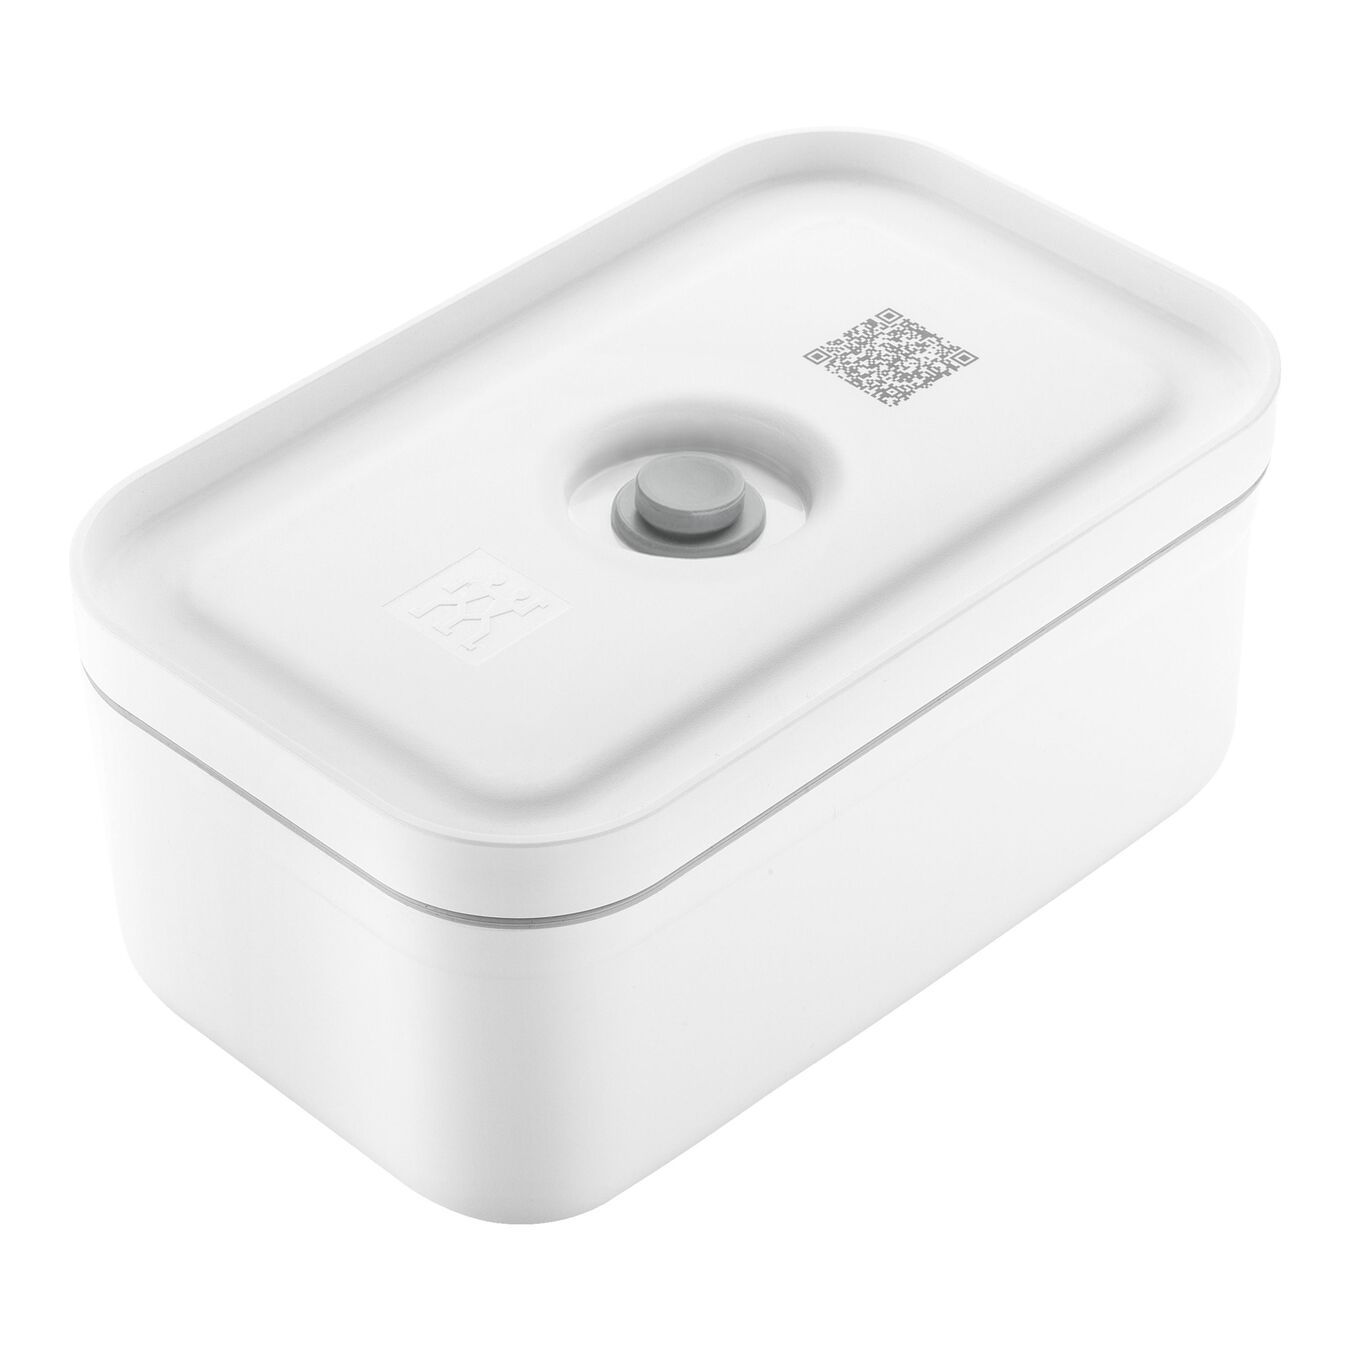 Vakuum Lunchbox M, Kunststoff, Weiß-grau,,large 1